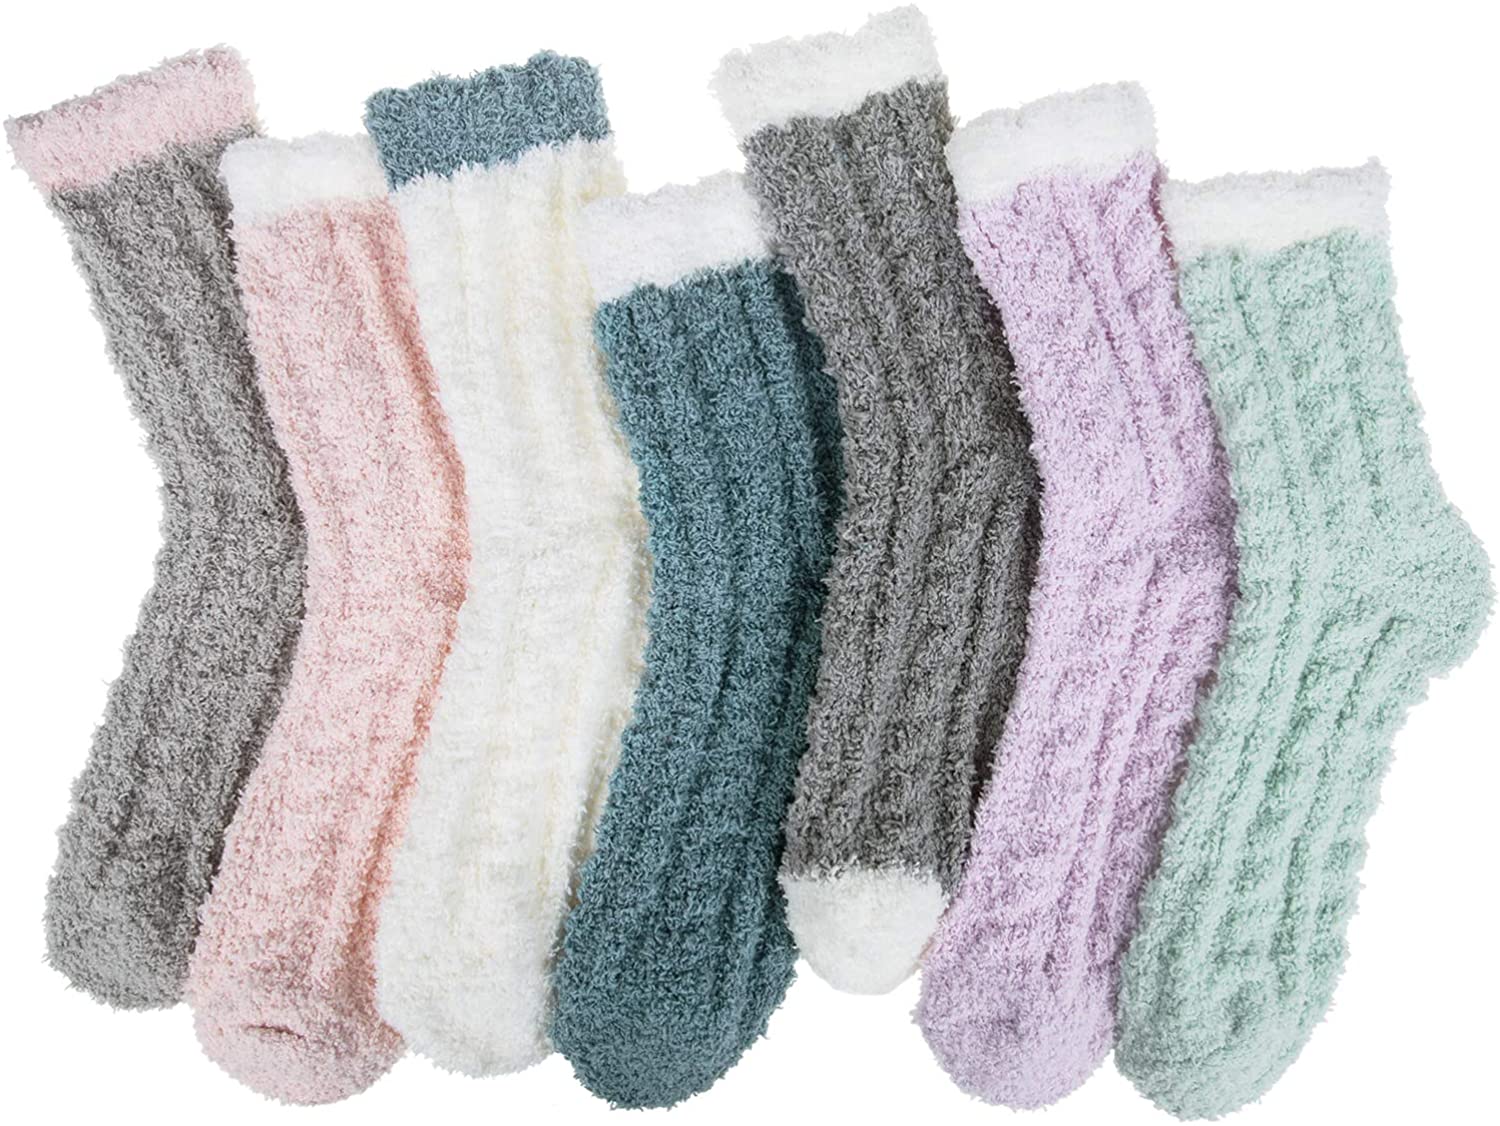 Loritta 5 Pairs Womens Fuzzy Socks Winter Warm Cozy Fluffy Super Soft Slipper Socks